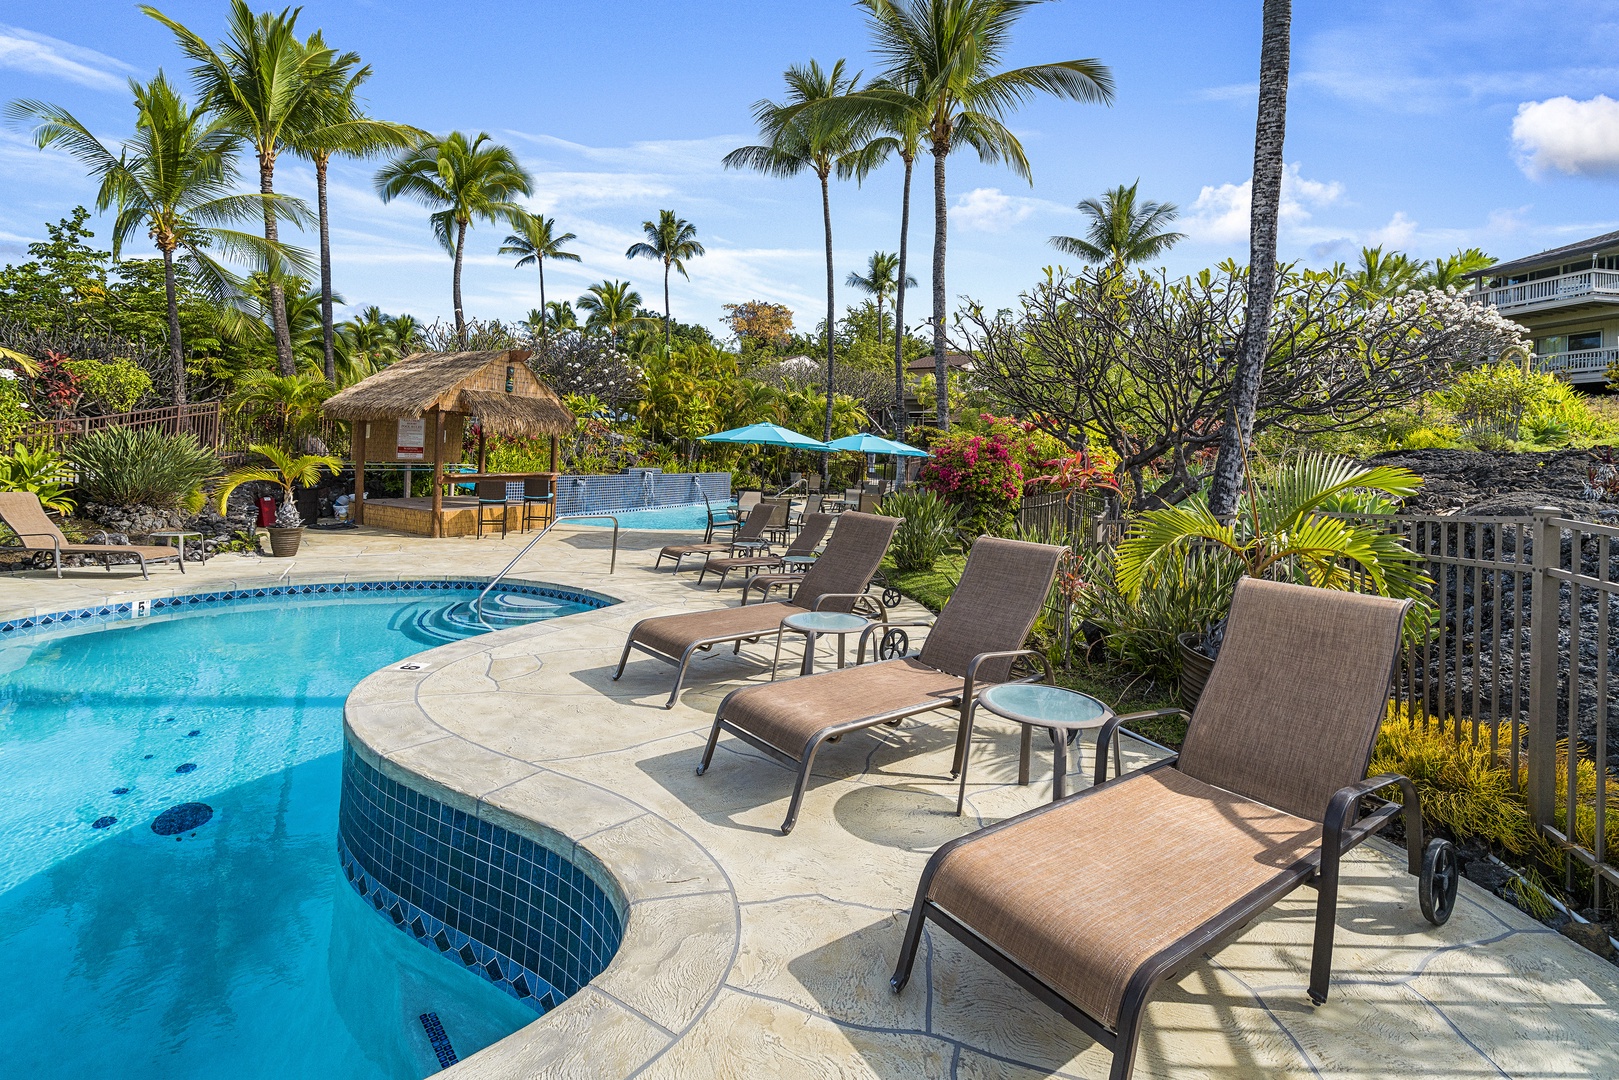 Kailua Kona Vacation Rentals, Keauhou Resort 113 - 